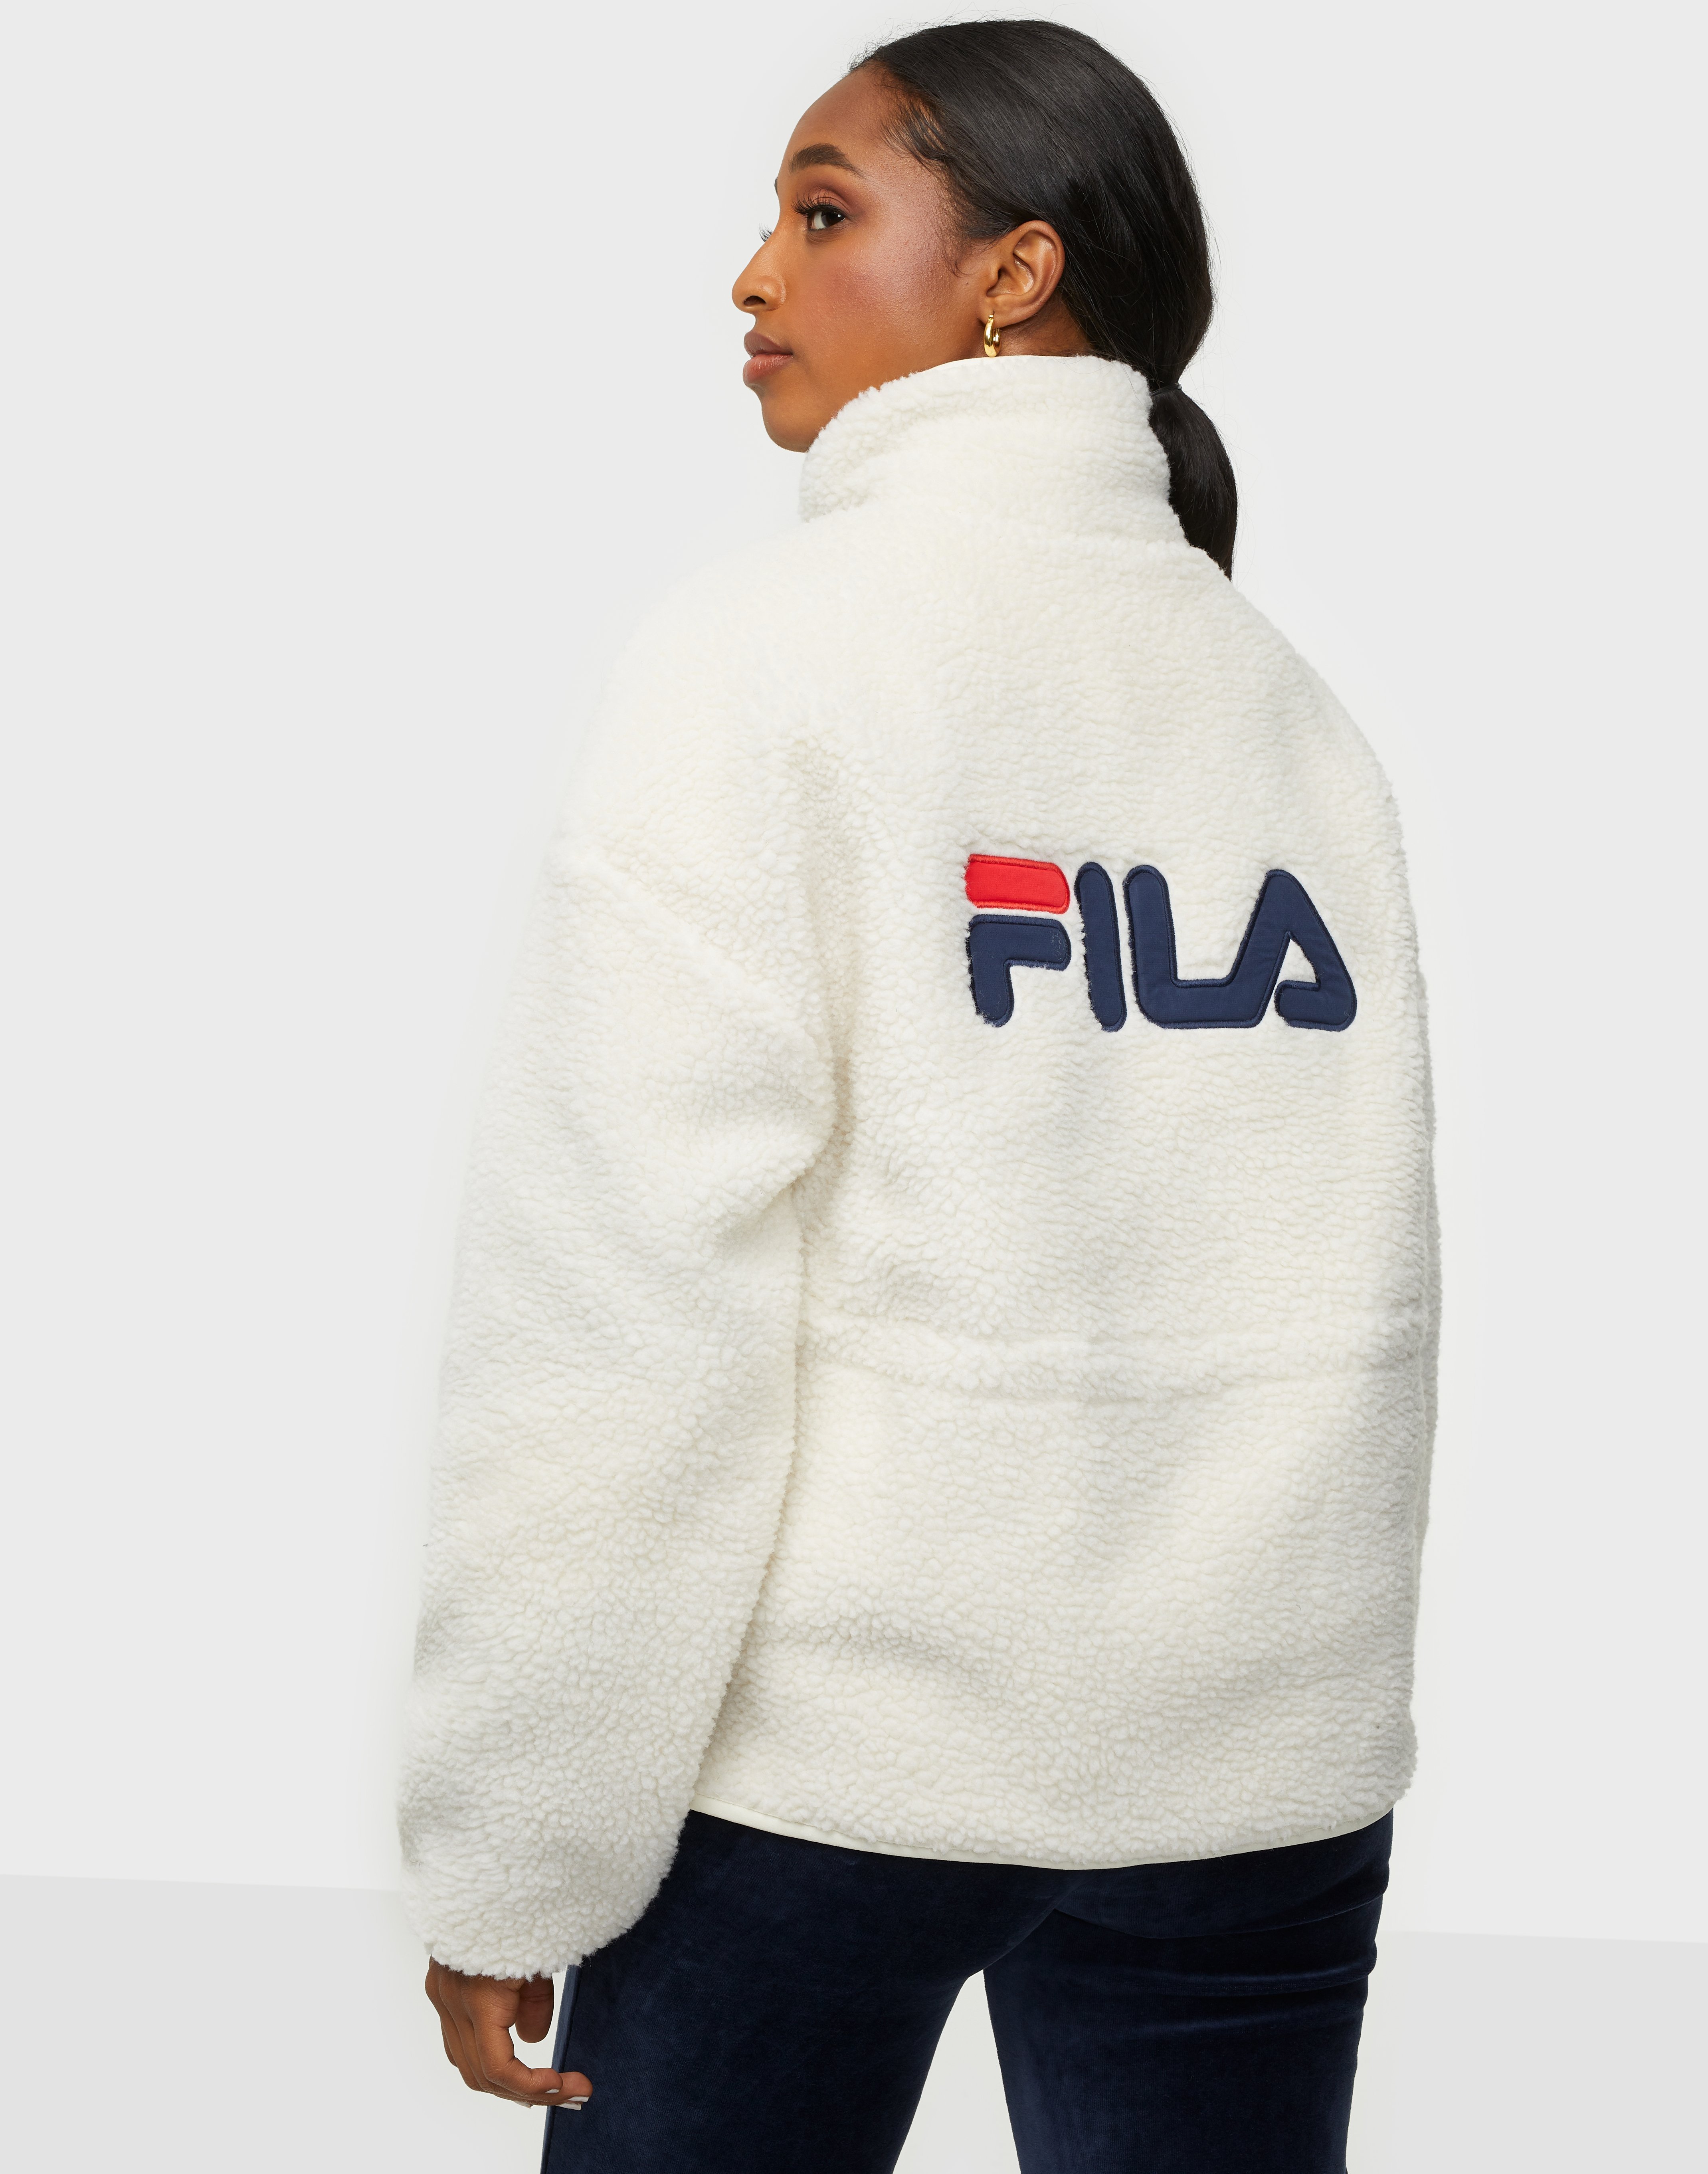 fila fleece jacket